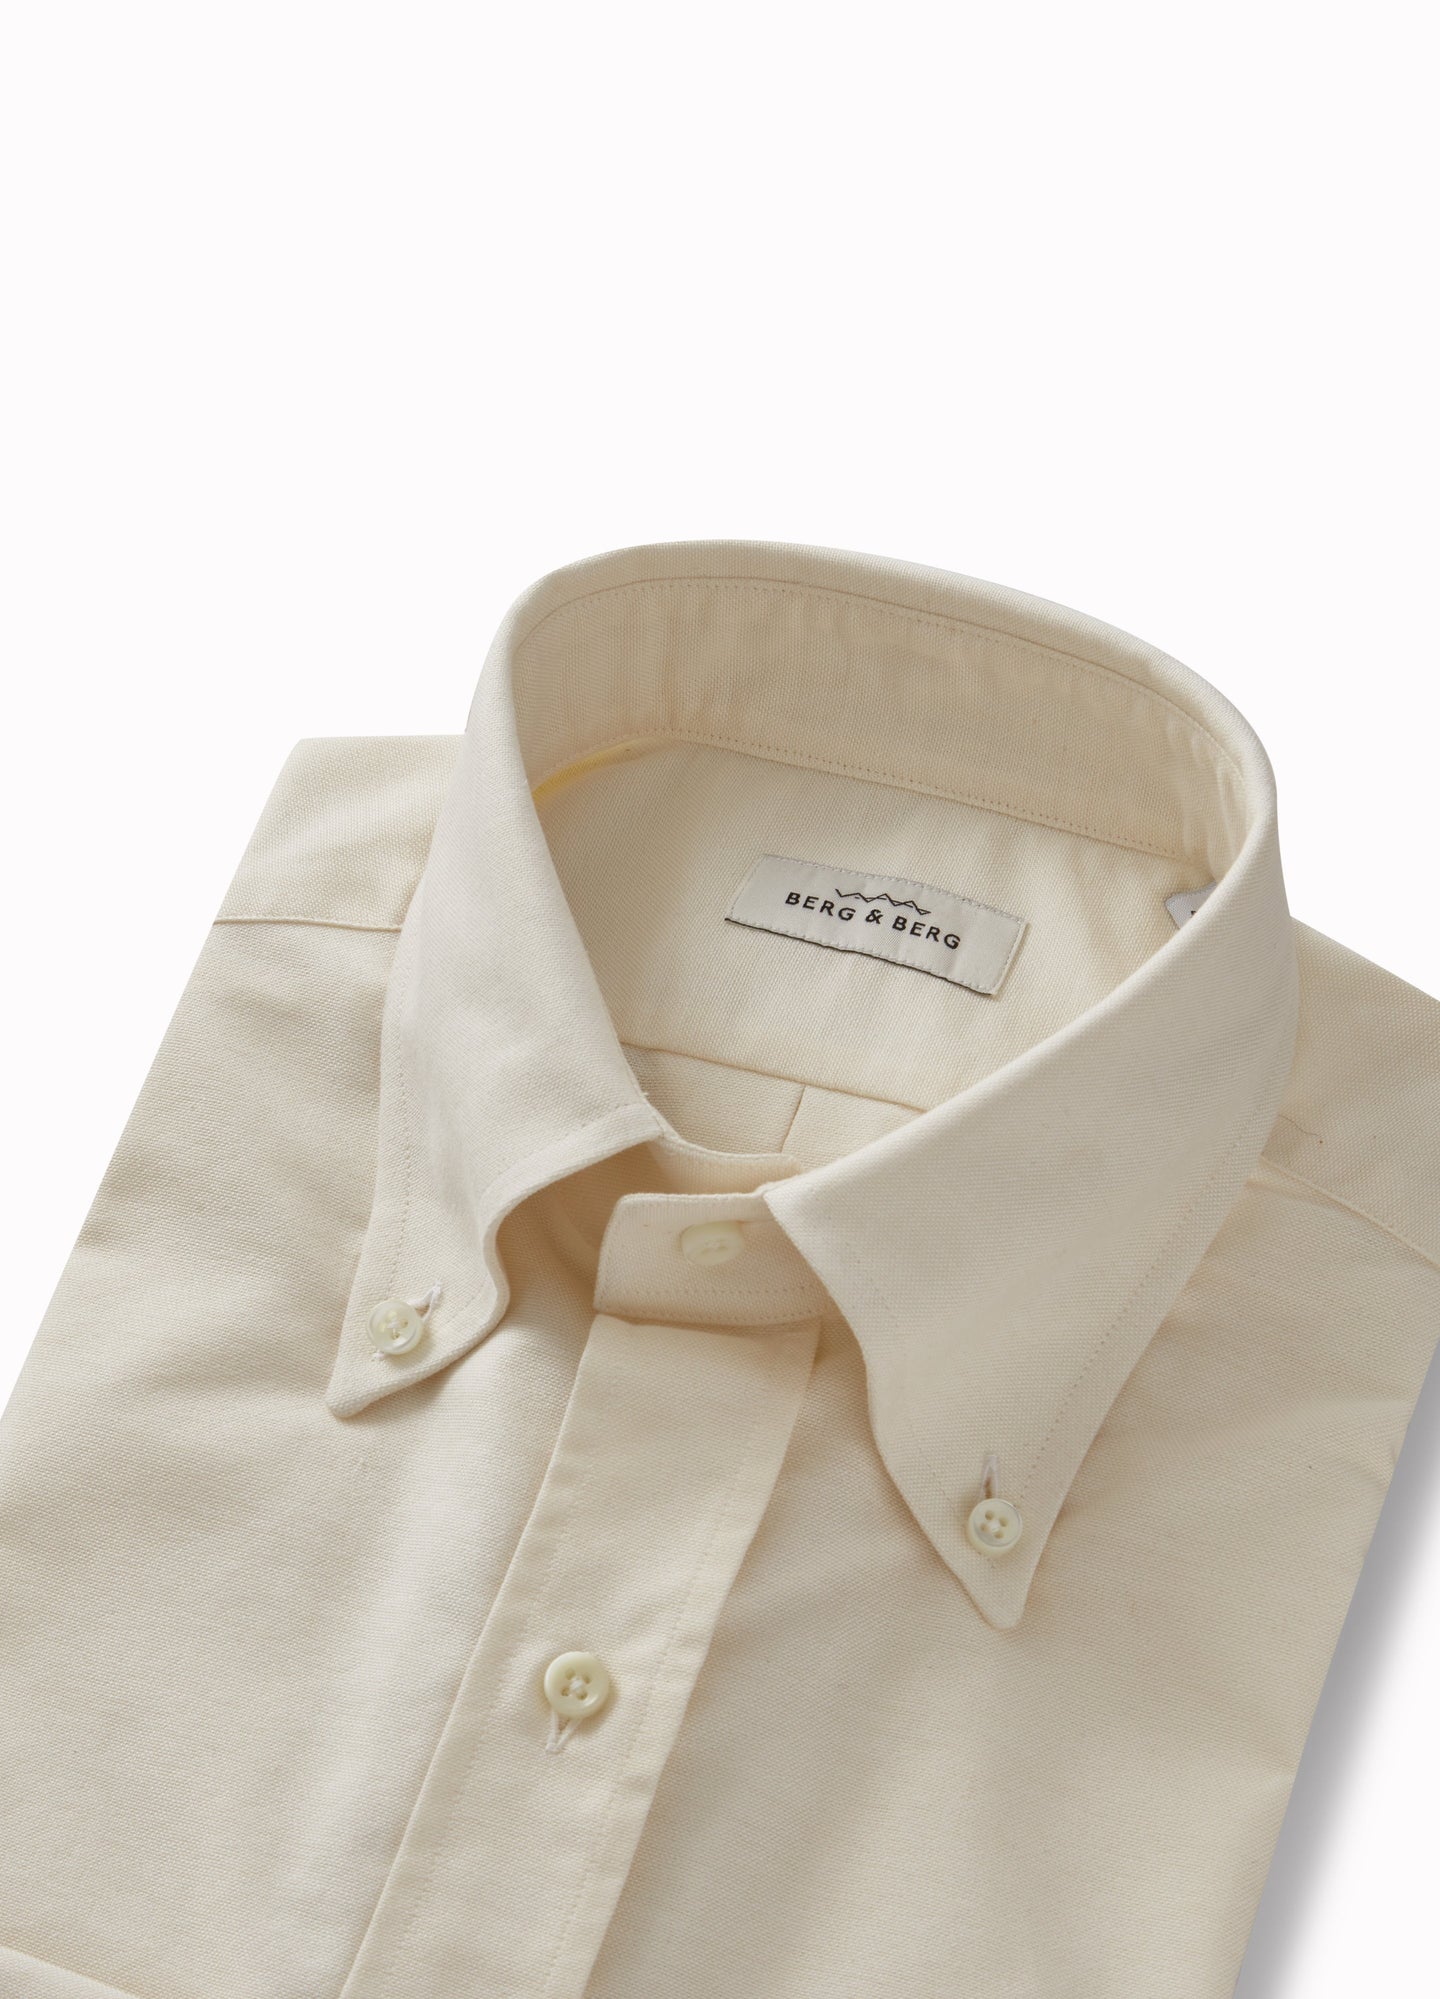 Ferdinand Button Down Shirt - Cream Berg & Berg